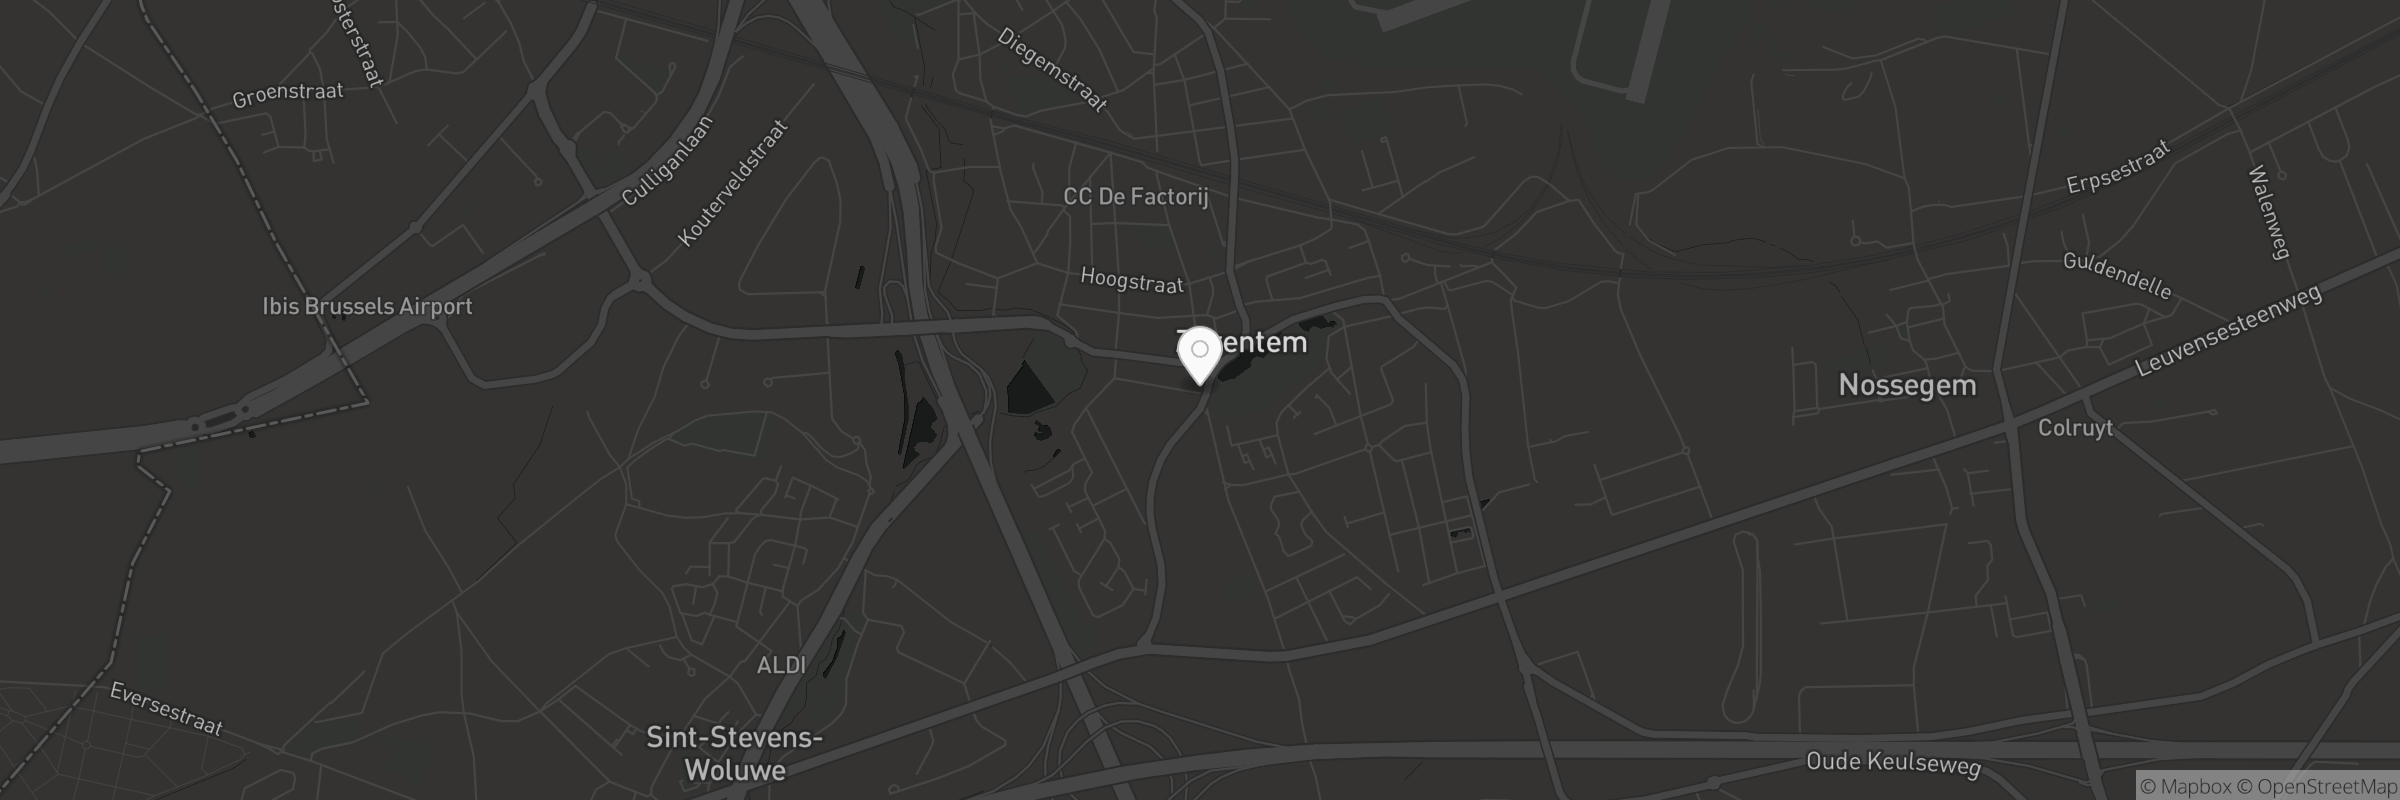 Map showing the address of Zaventem